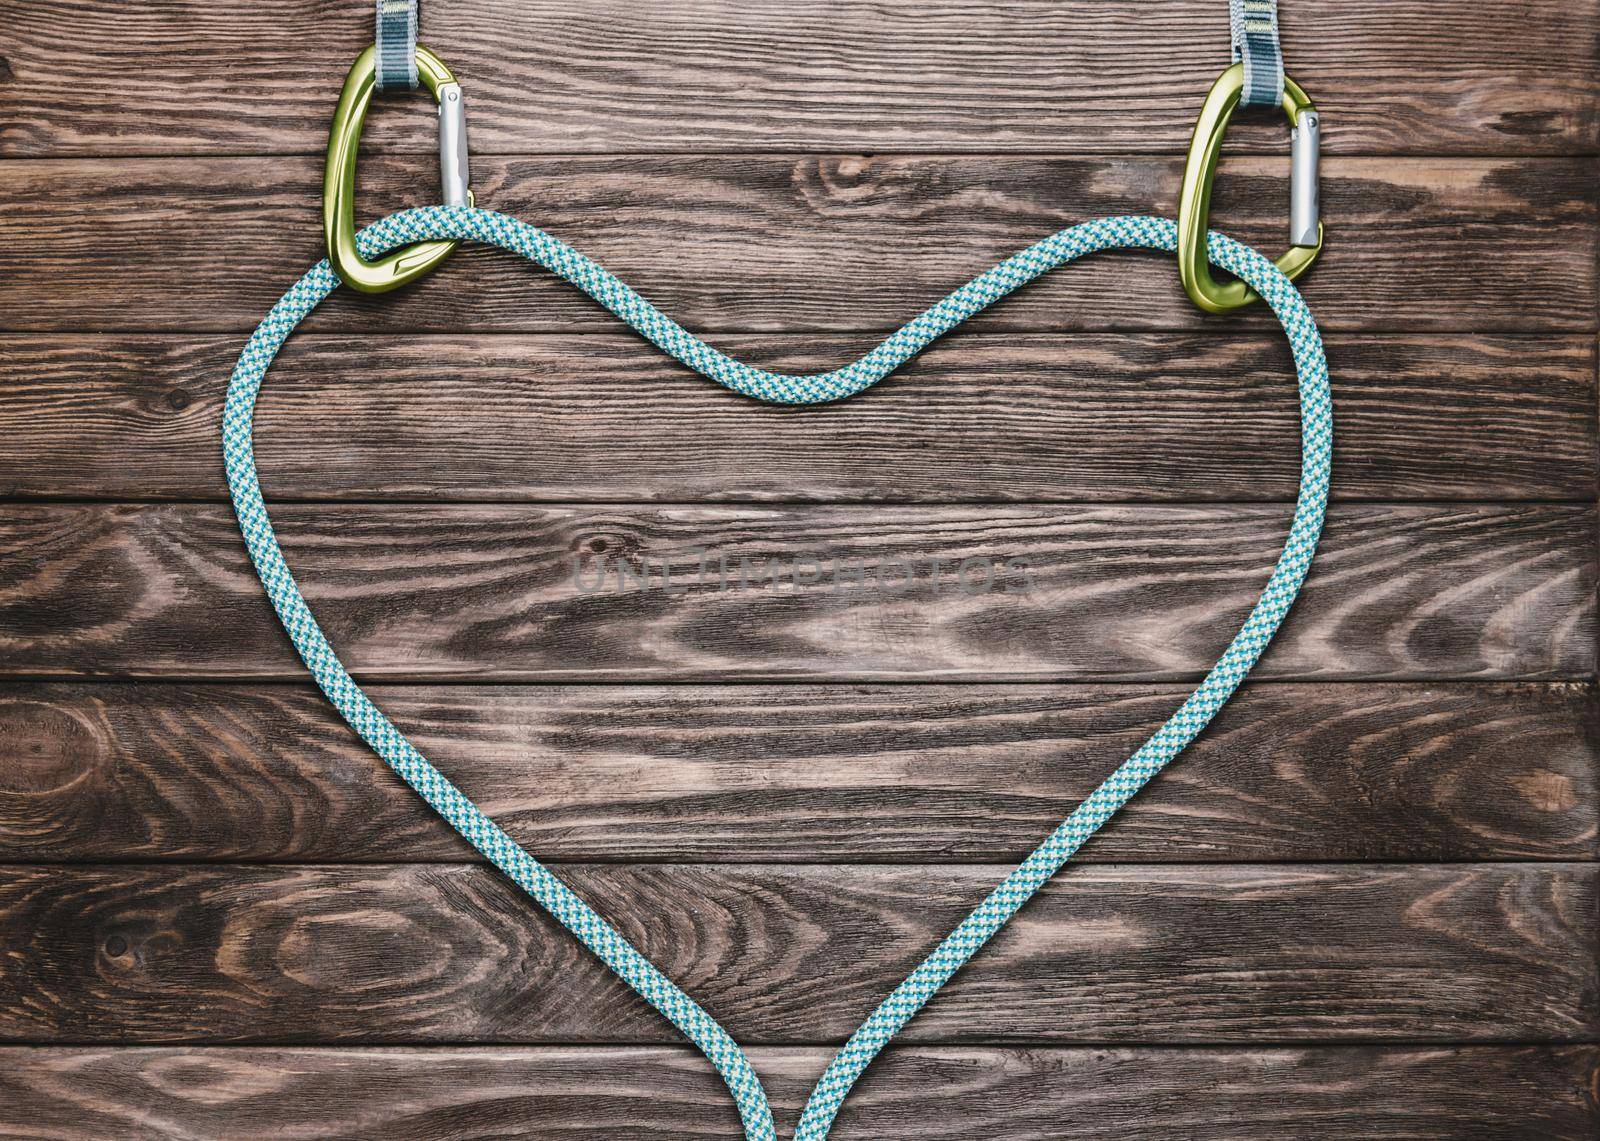 Climbing rope in shape of a heart. by alexAleksei